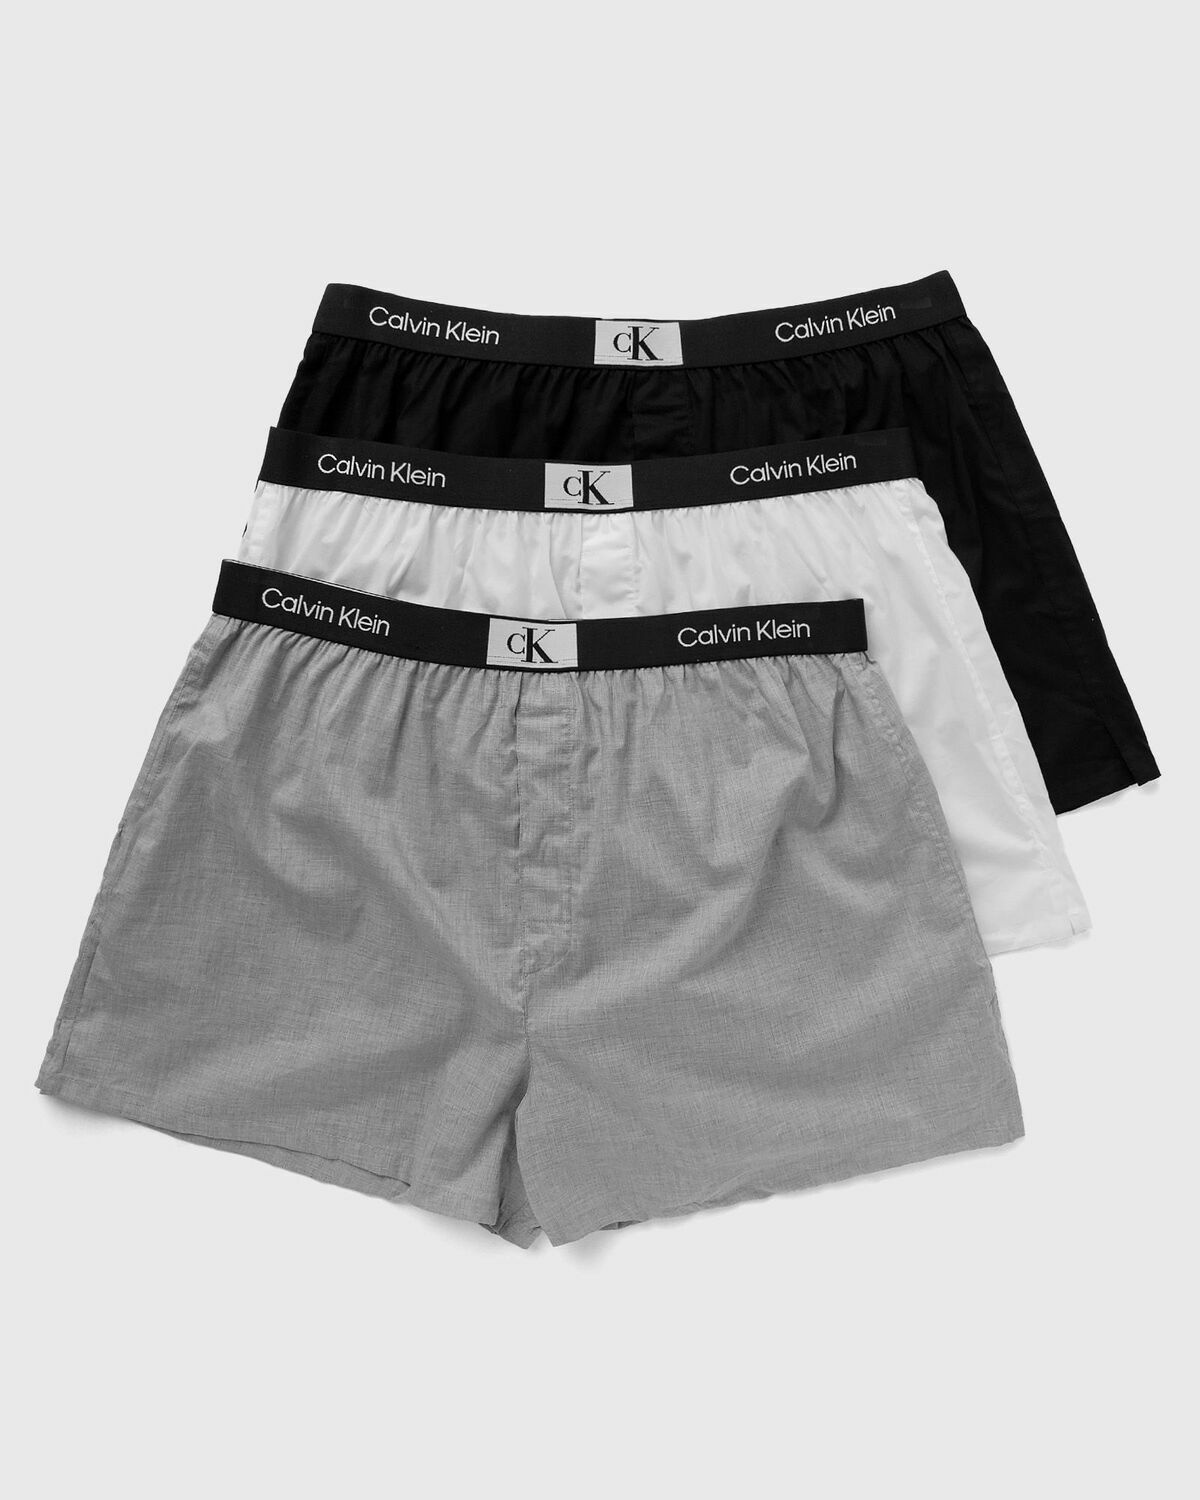 Mens Calvin Klein multi 1996 Boxer Shorts (Pack of 3)